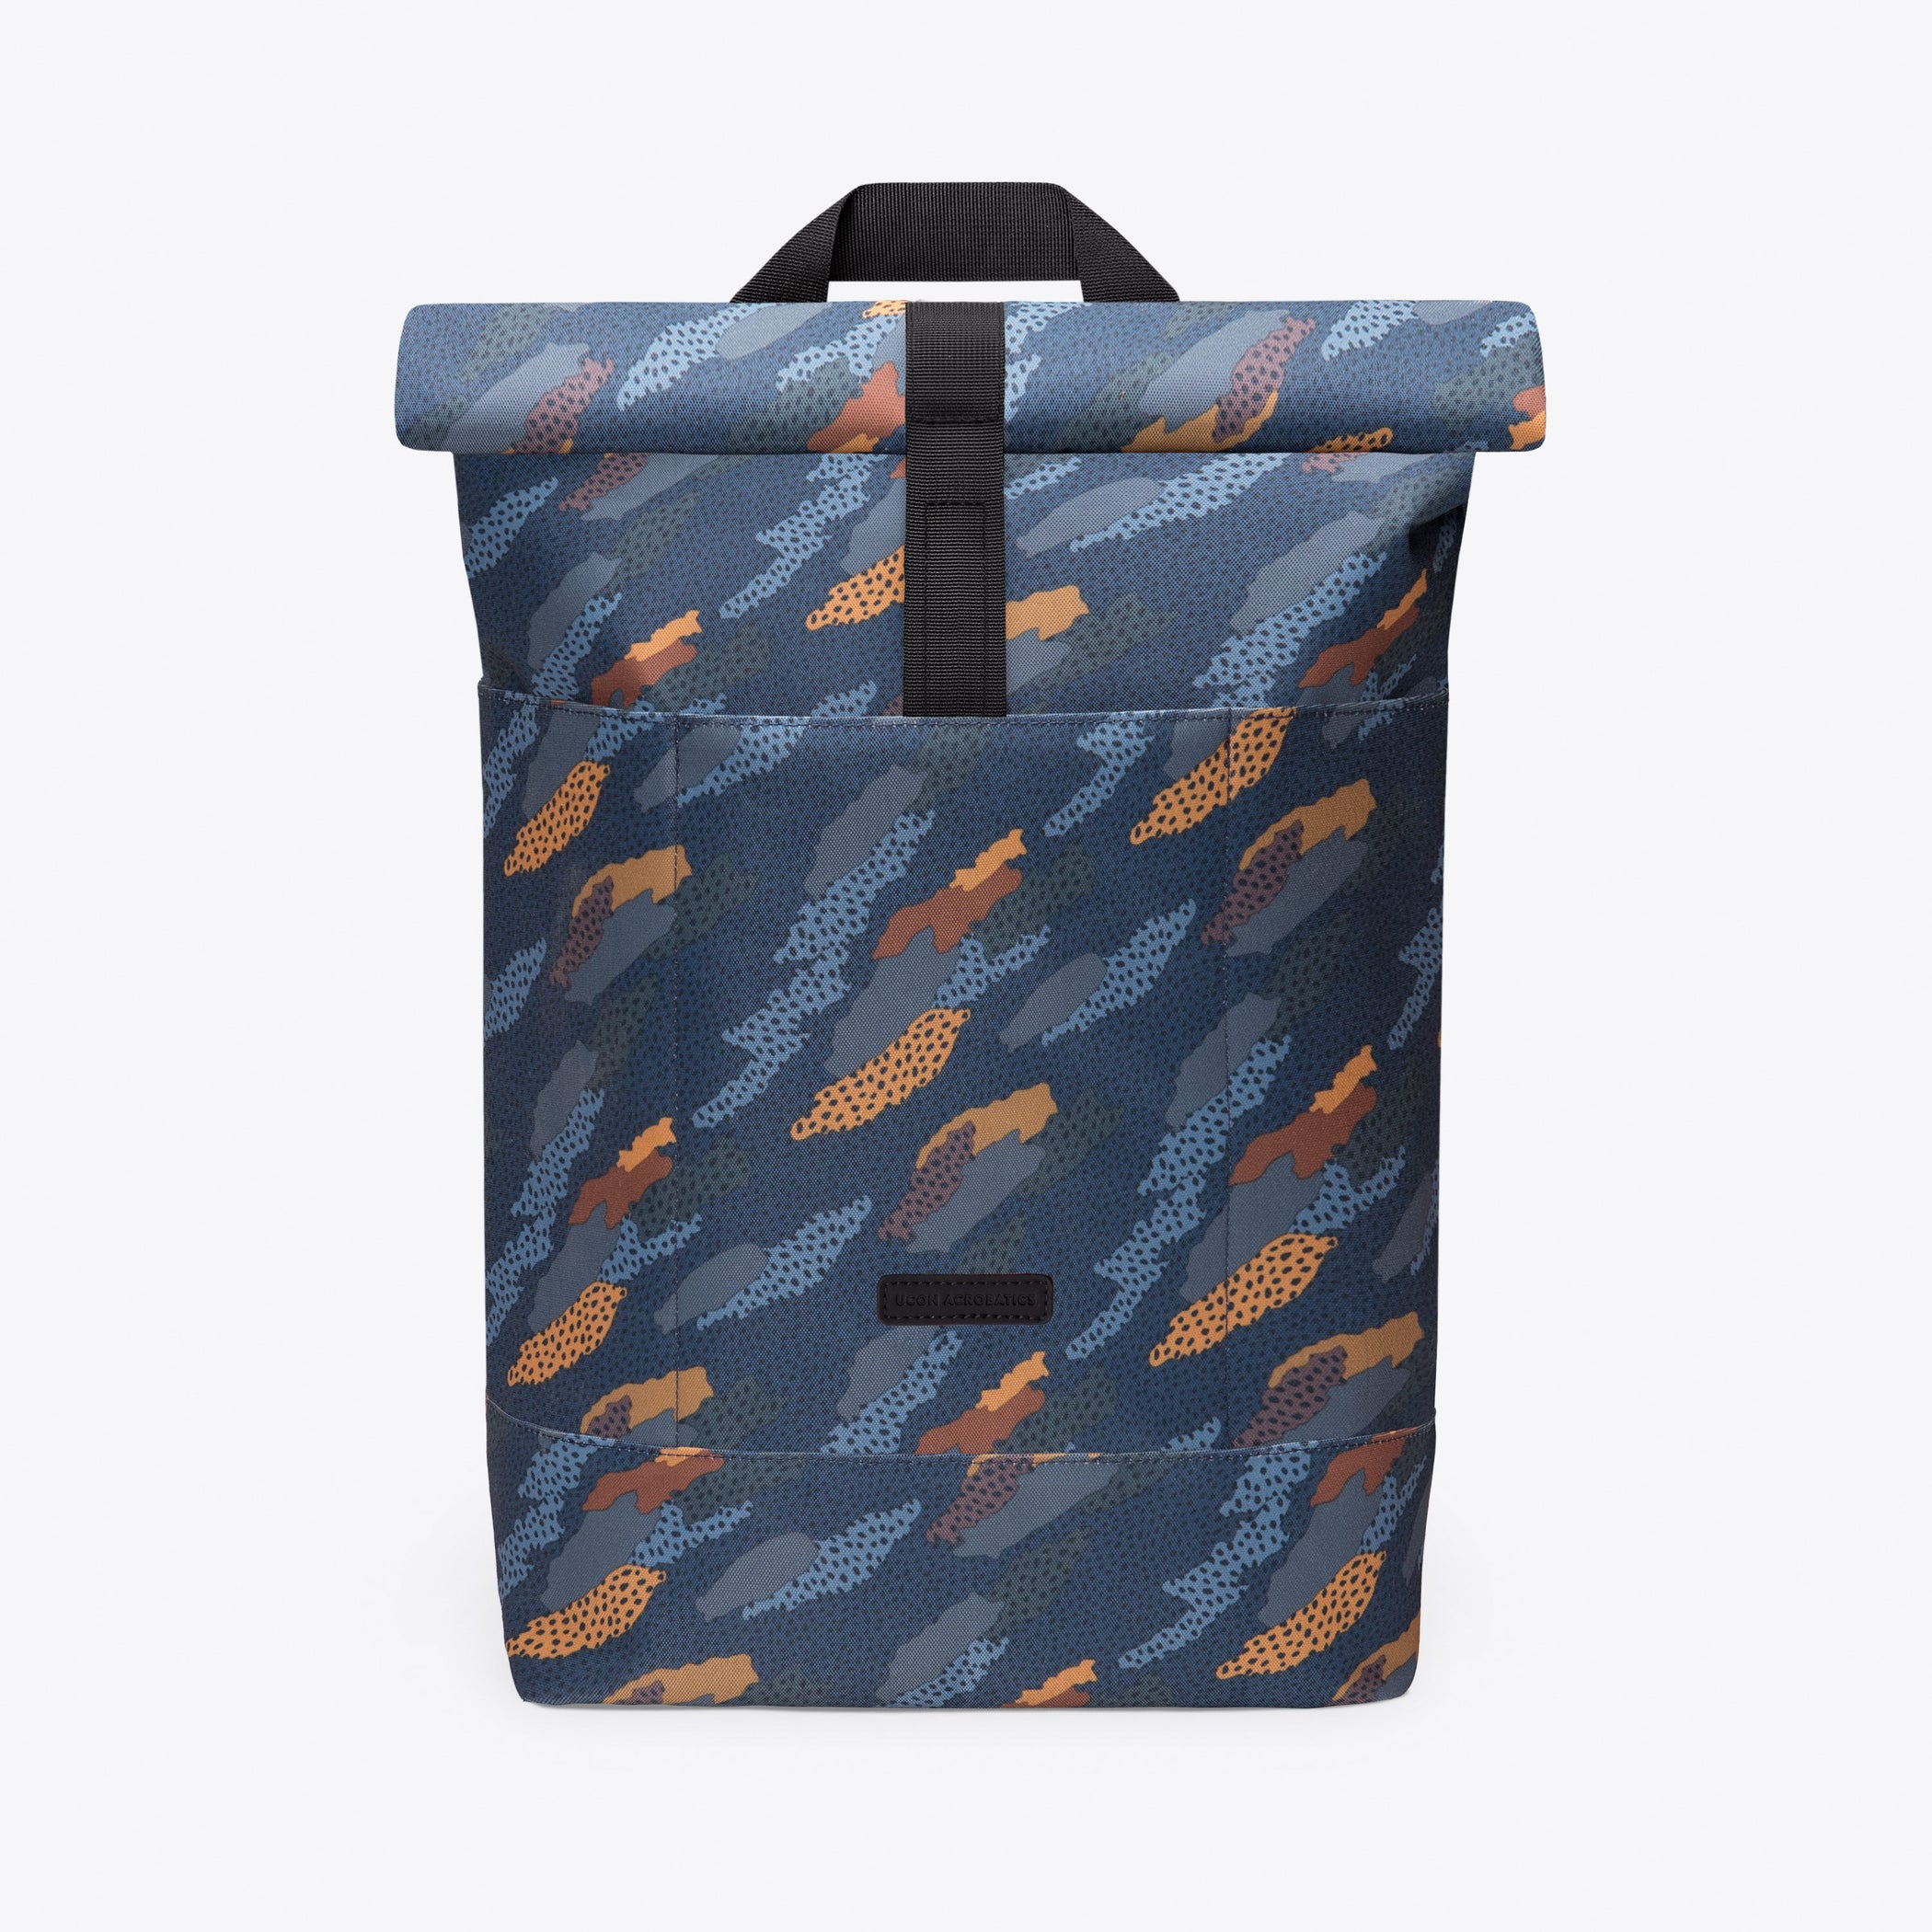 Hajo Medium Backpack • Minimalistic backpacks from Ucon Acrobatics